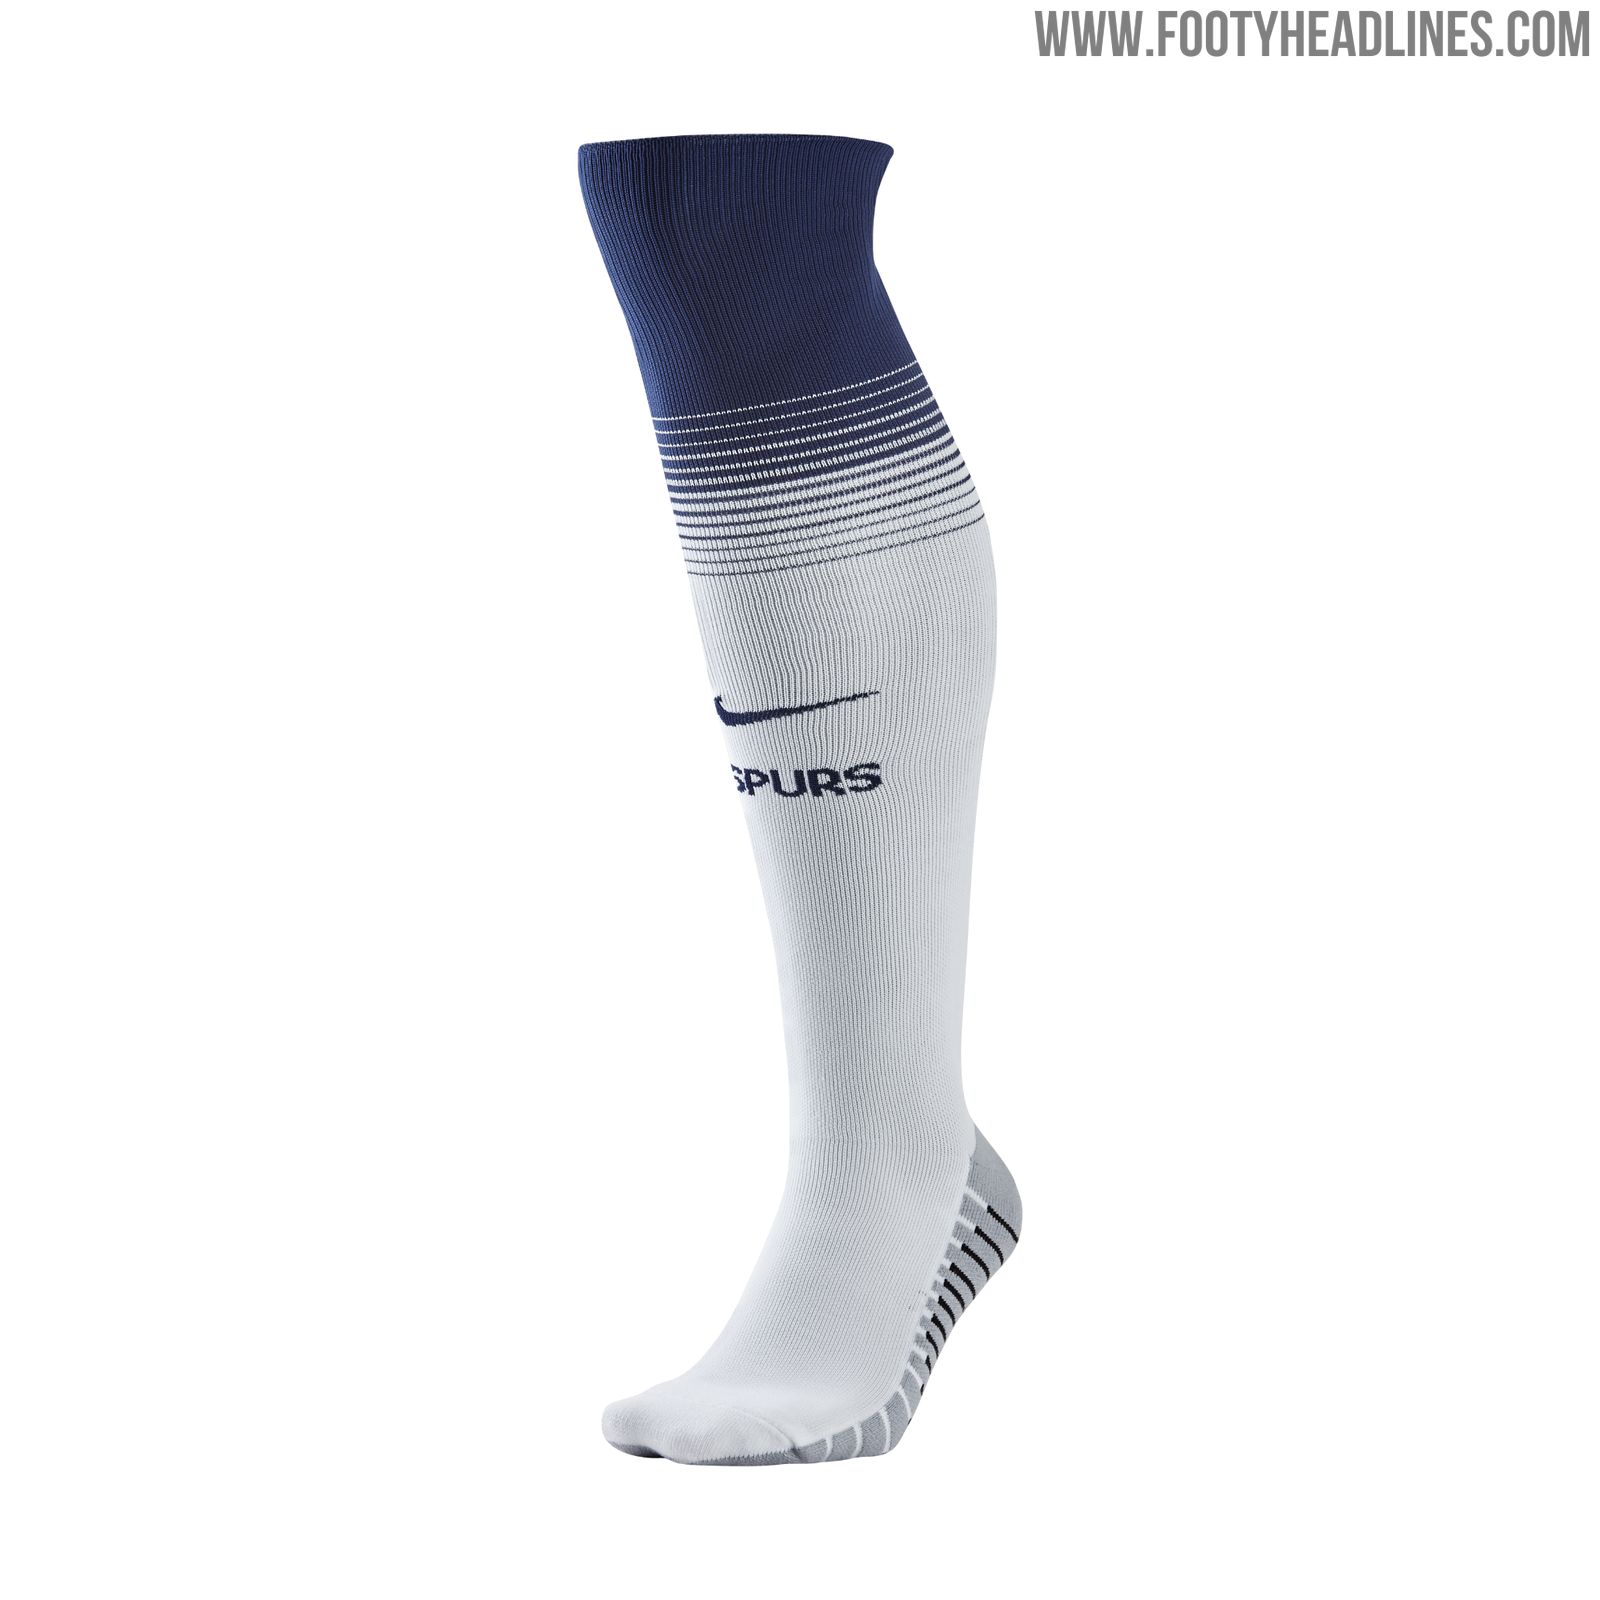 Nike Launch Tottenham Hotspur 18/19 Kits - SoccerBible